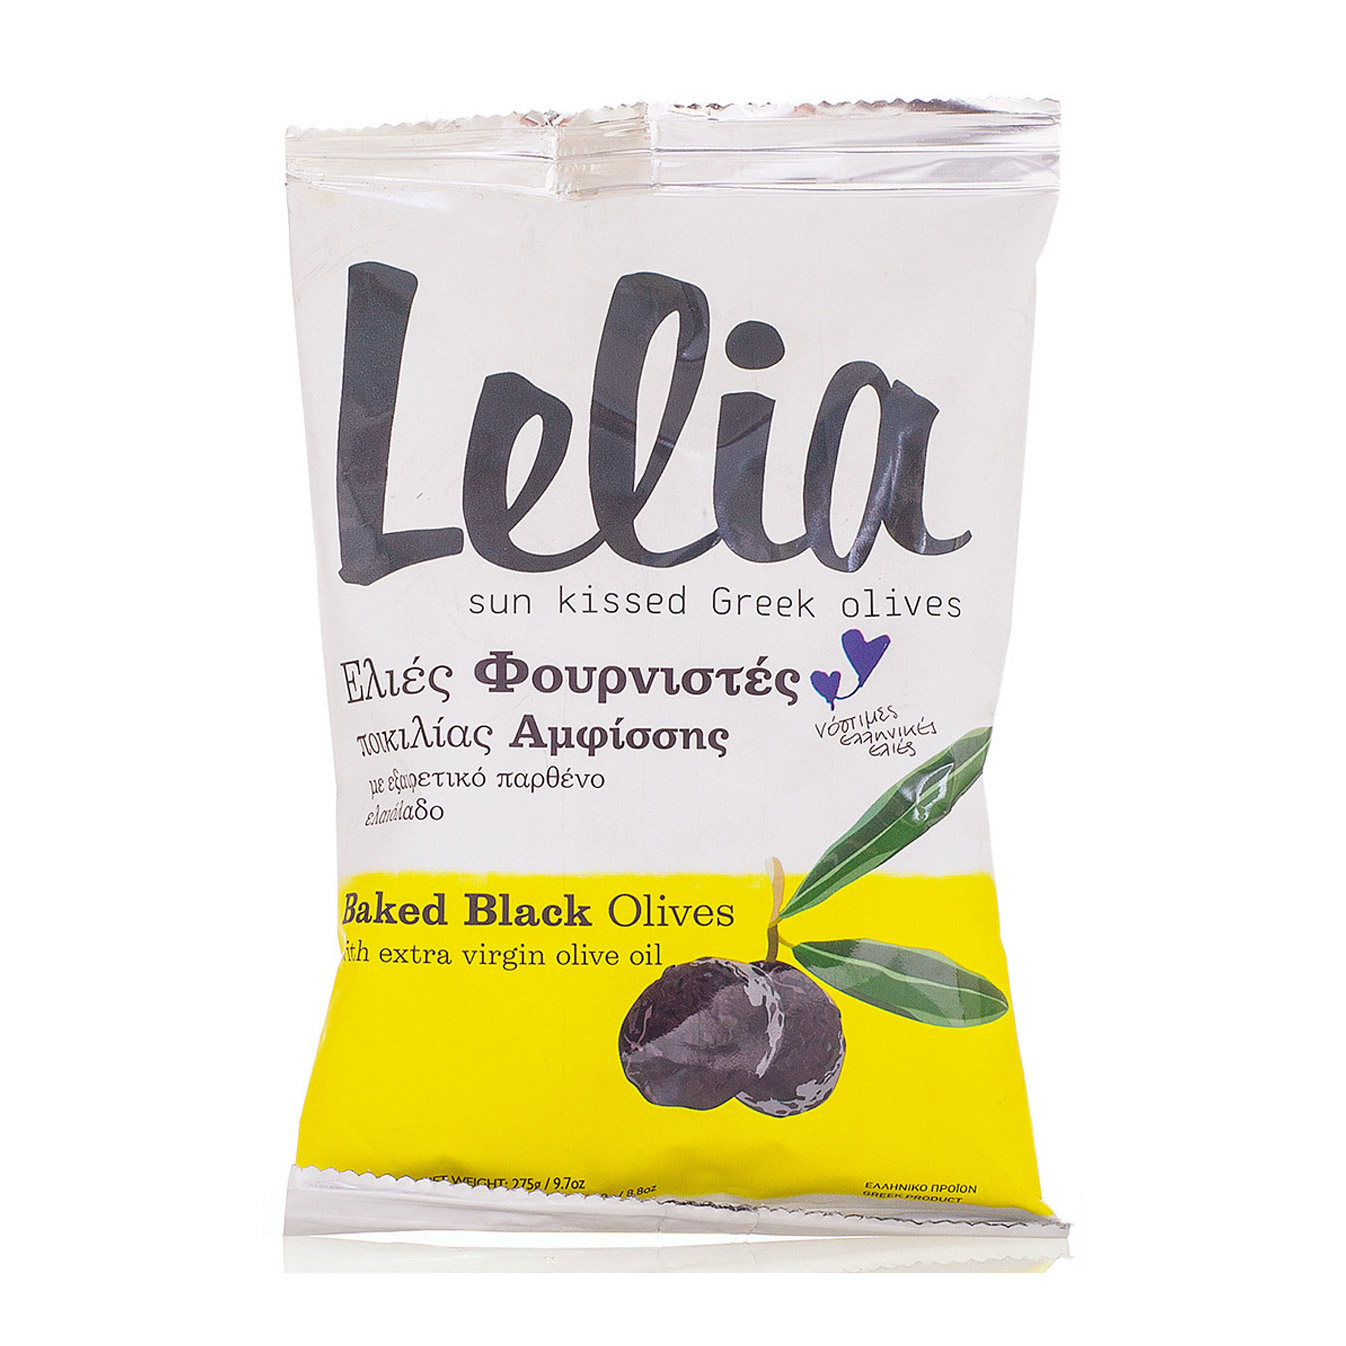 Оливки Lelia с косточкой сушеные в оливковом масле Фурнистес 275 г george sand lelia autobiografischer roman